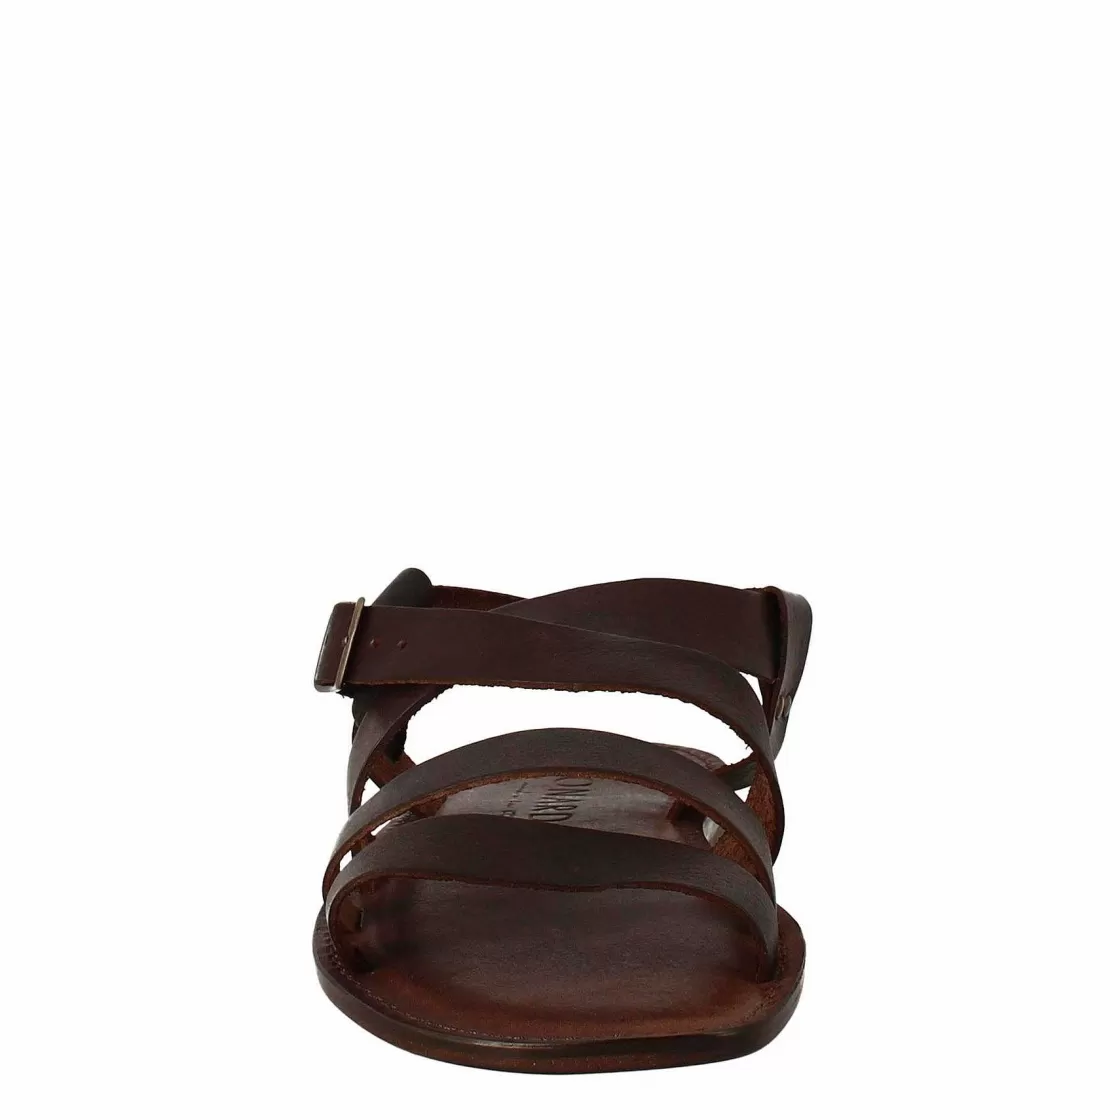 Leonardo Pisa Gladiator Sandals For Men In Brown Leather Best Sale